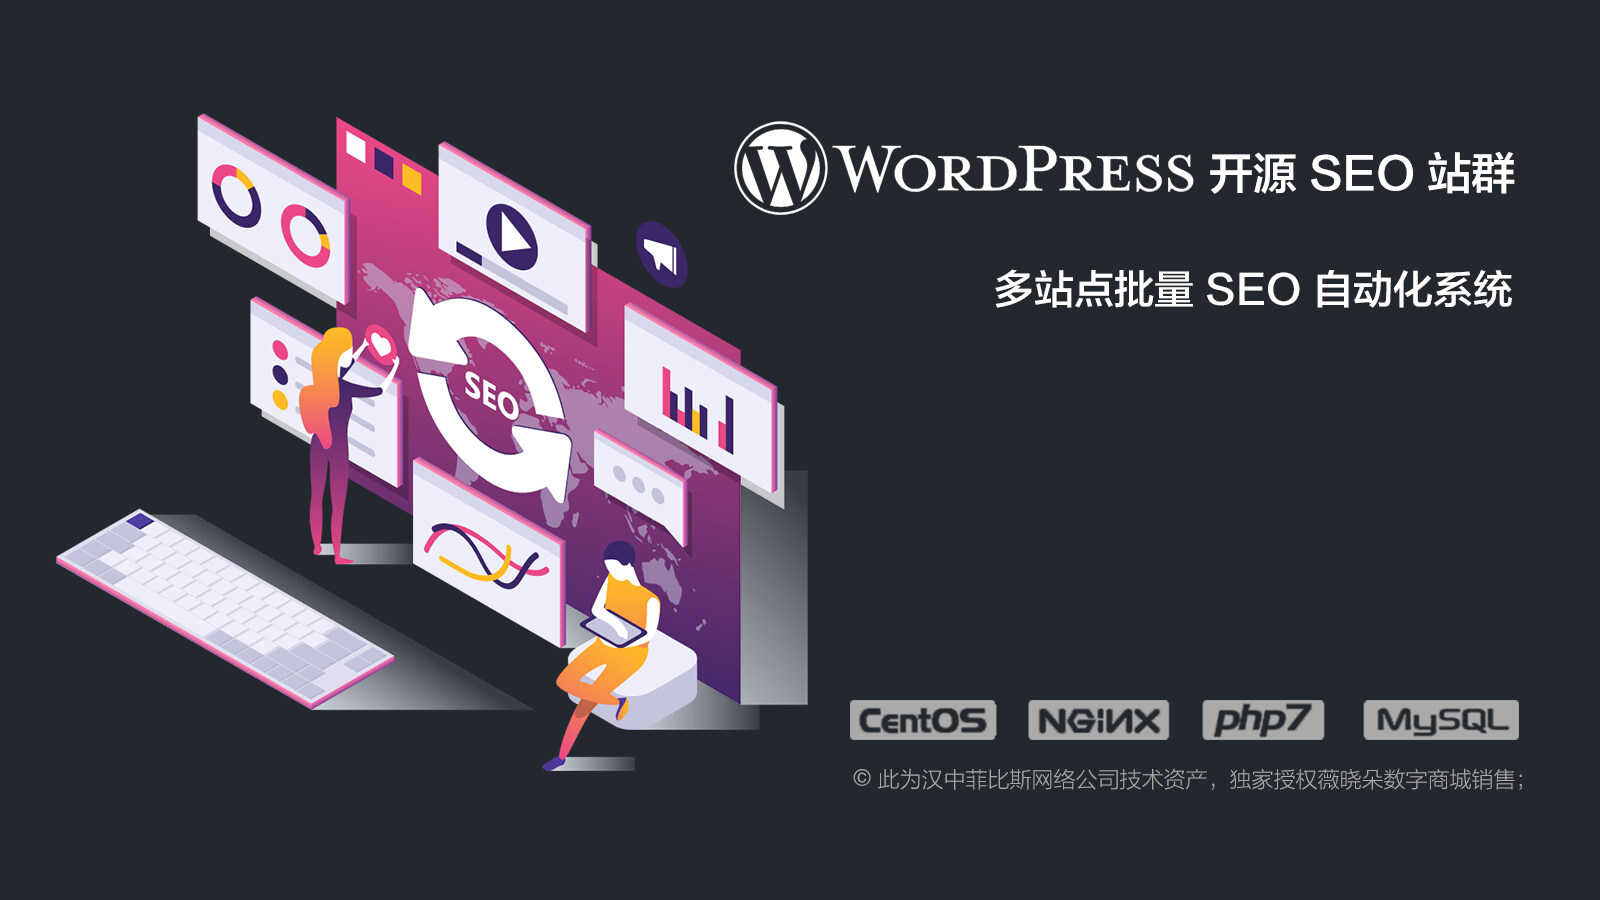 wordpress-multisite-seo-ss.jpg